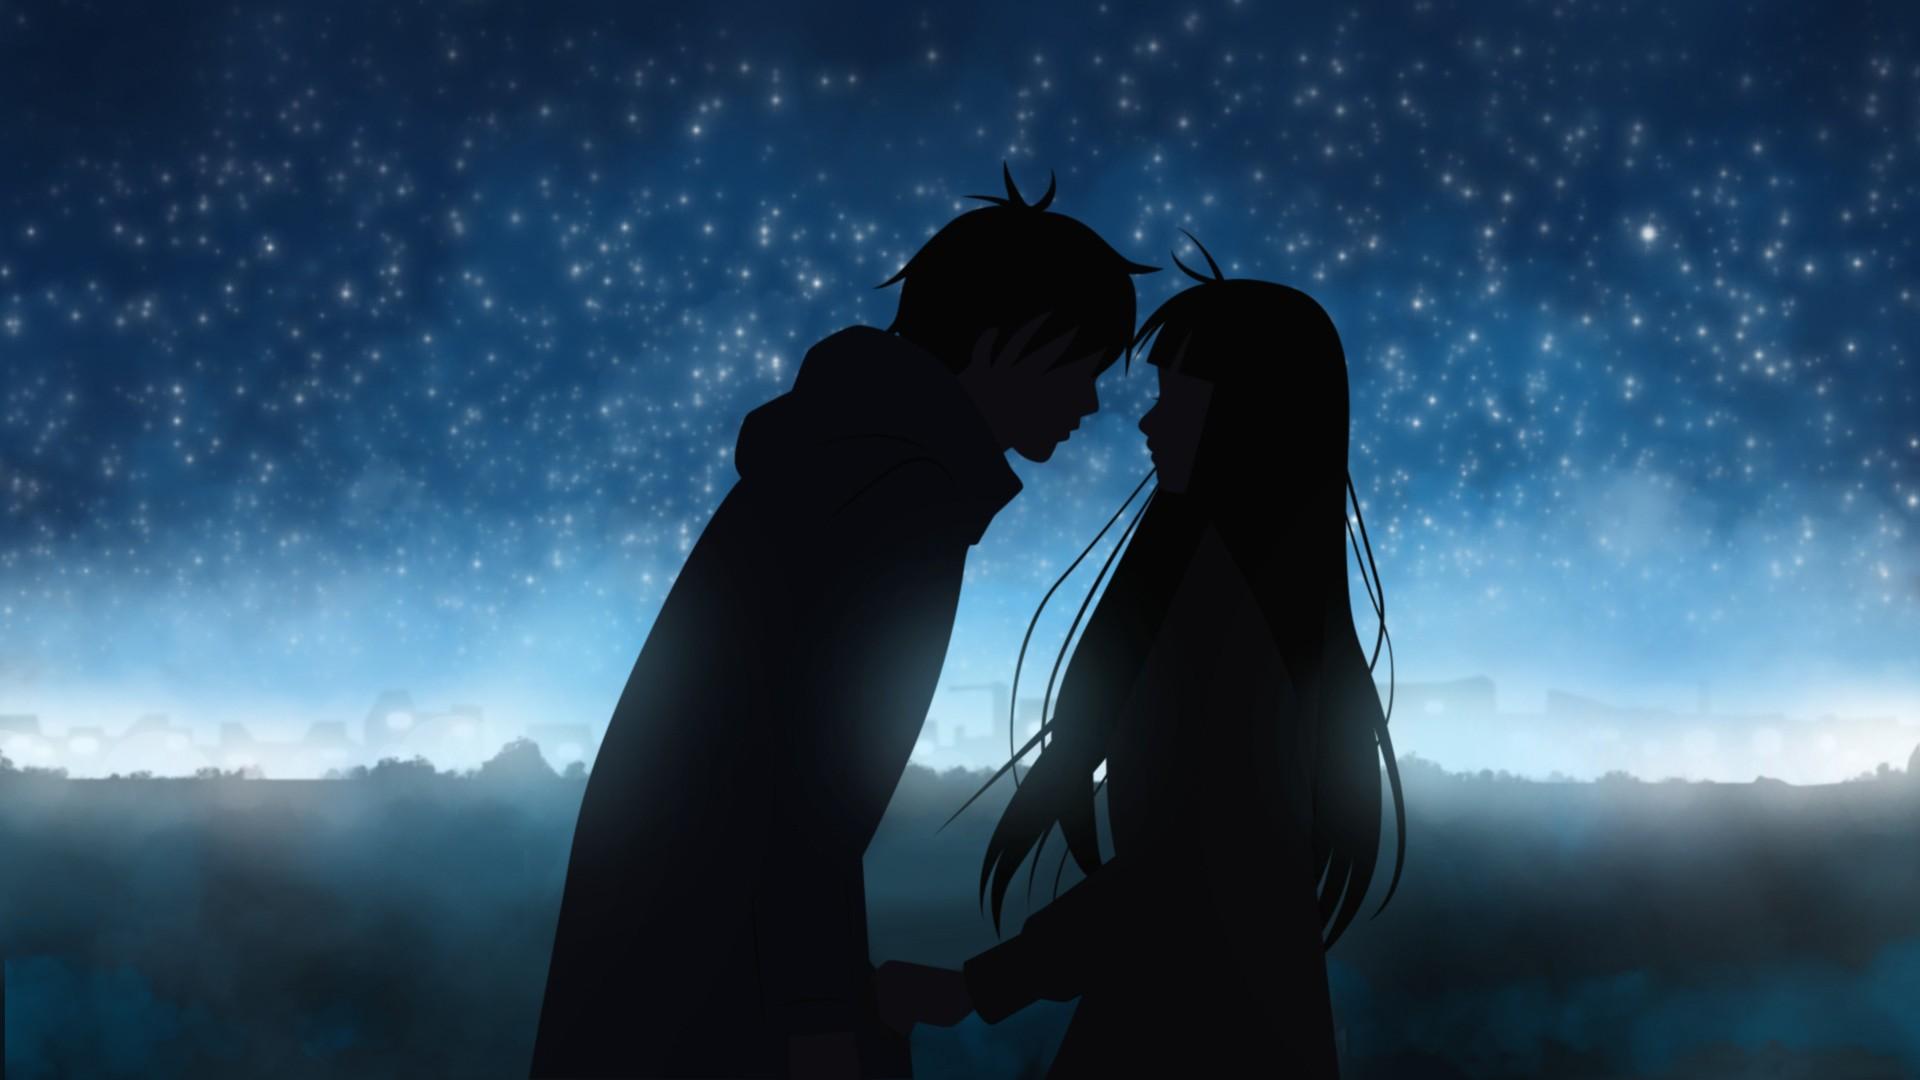 Romantic Anime Couple Wallpape Android क लए APK डउनलड कर